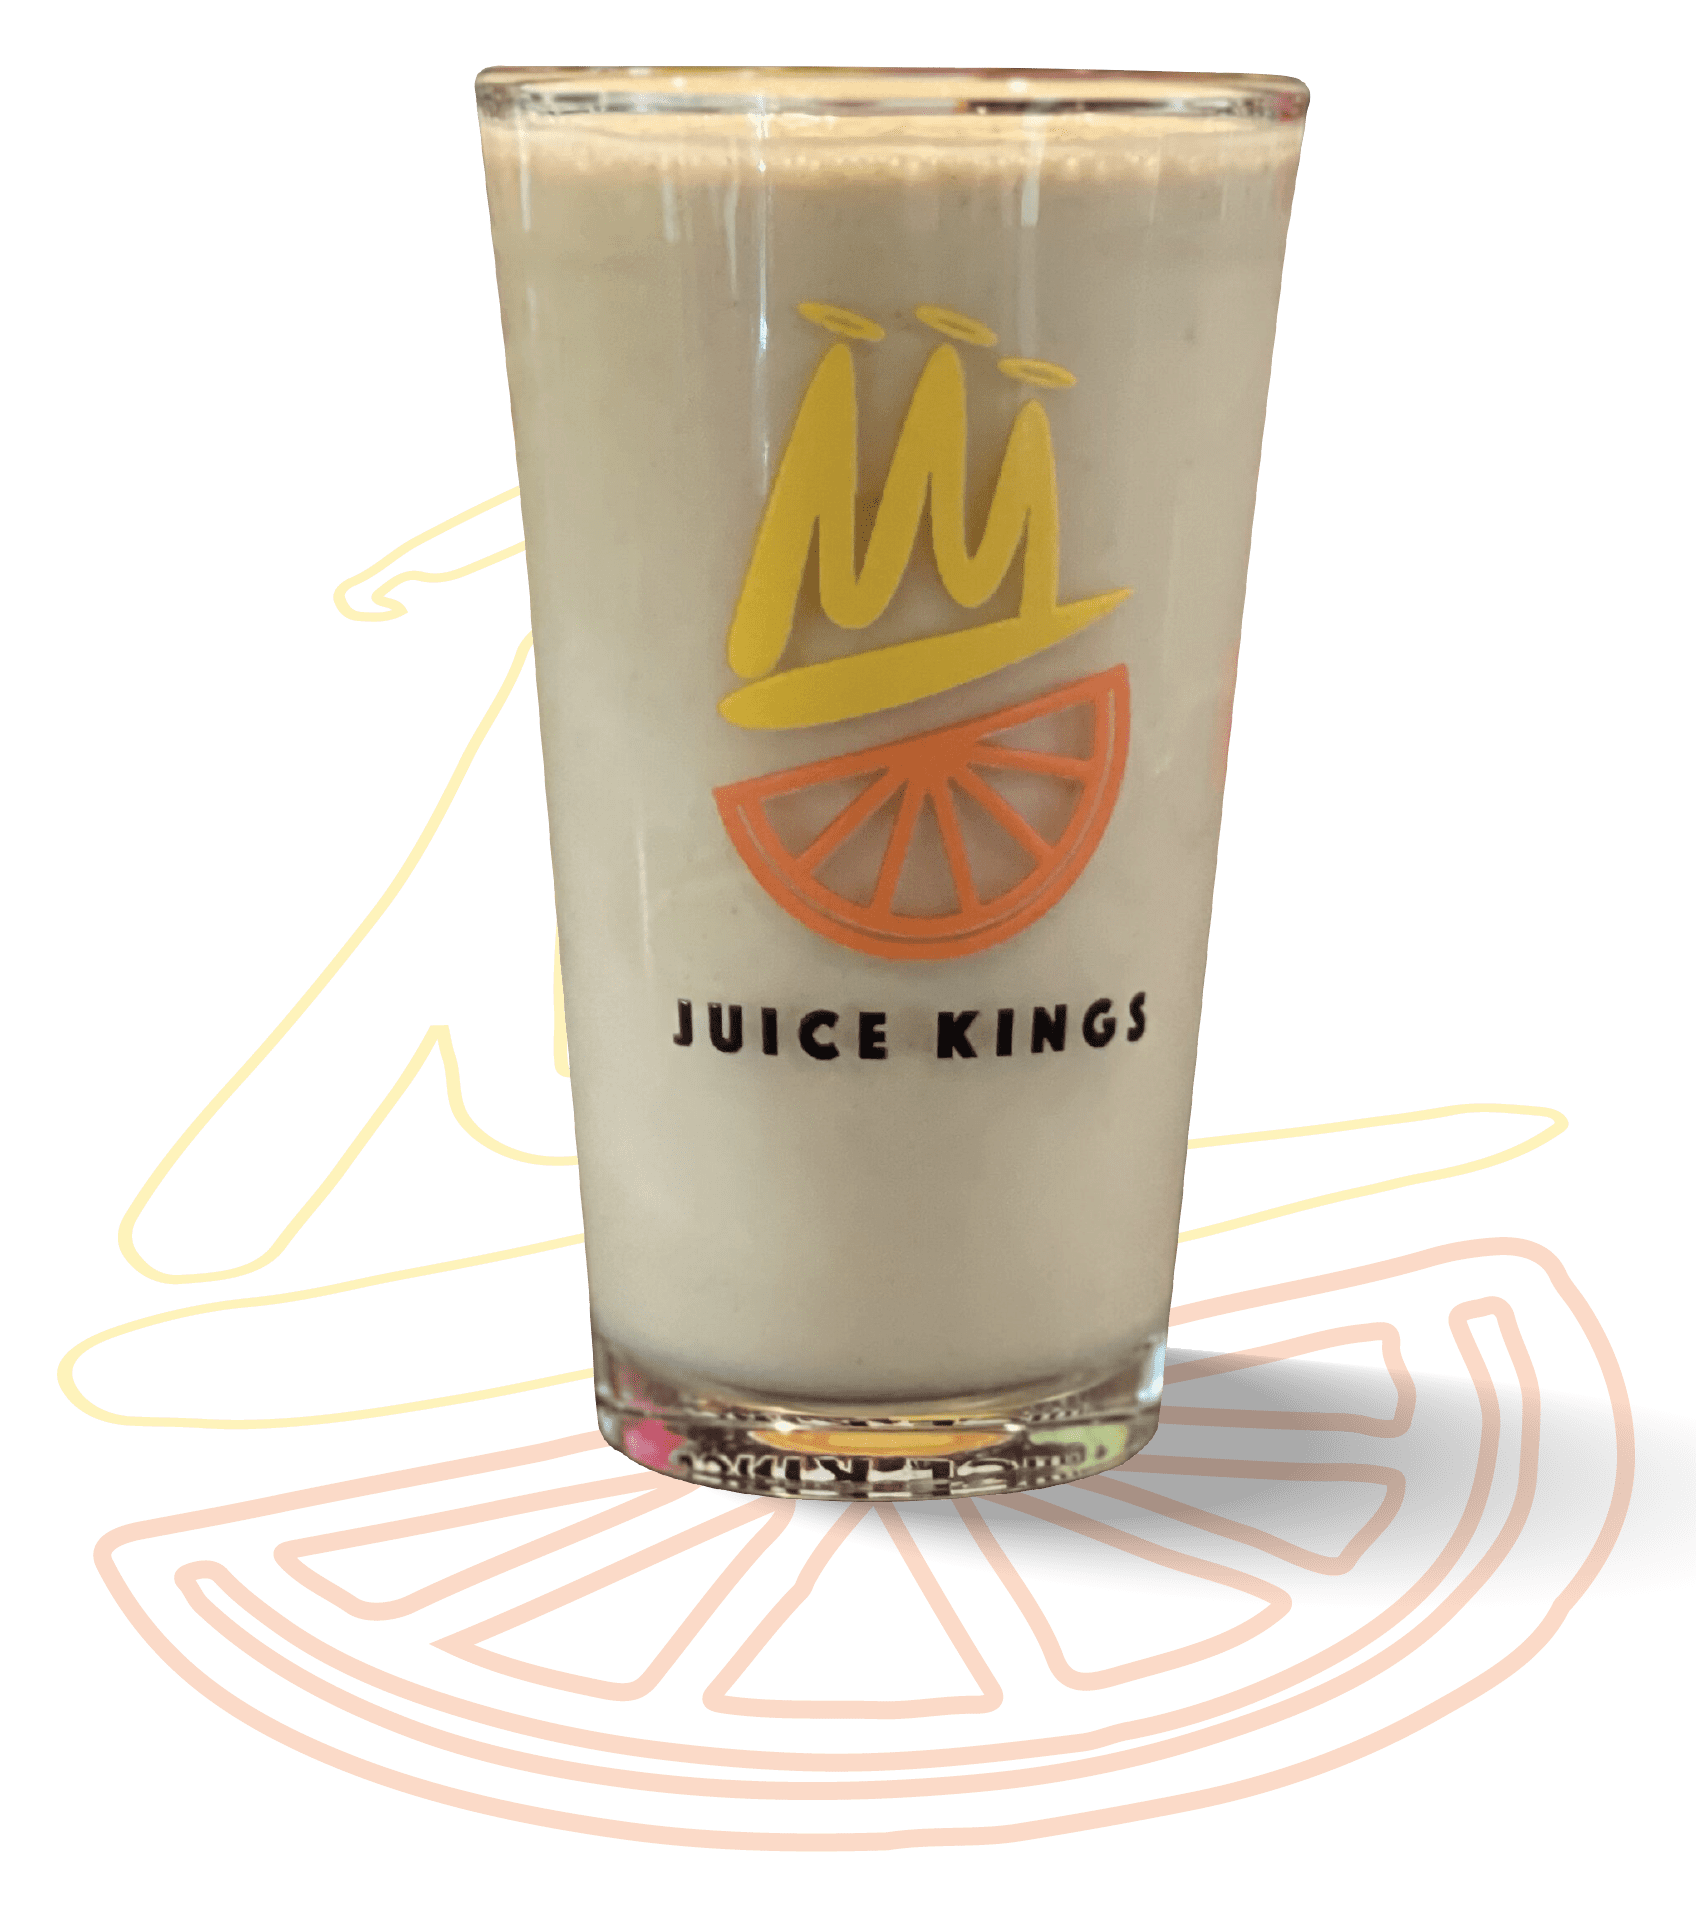 Juice Kings #1 selling drink, the Banana Mania